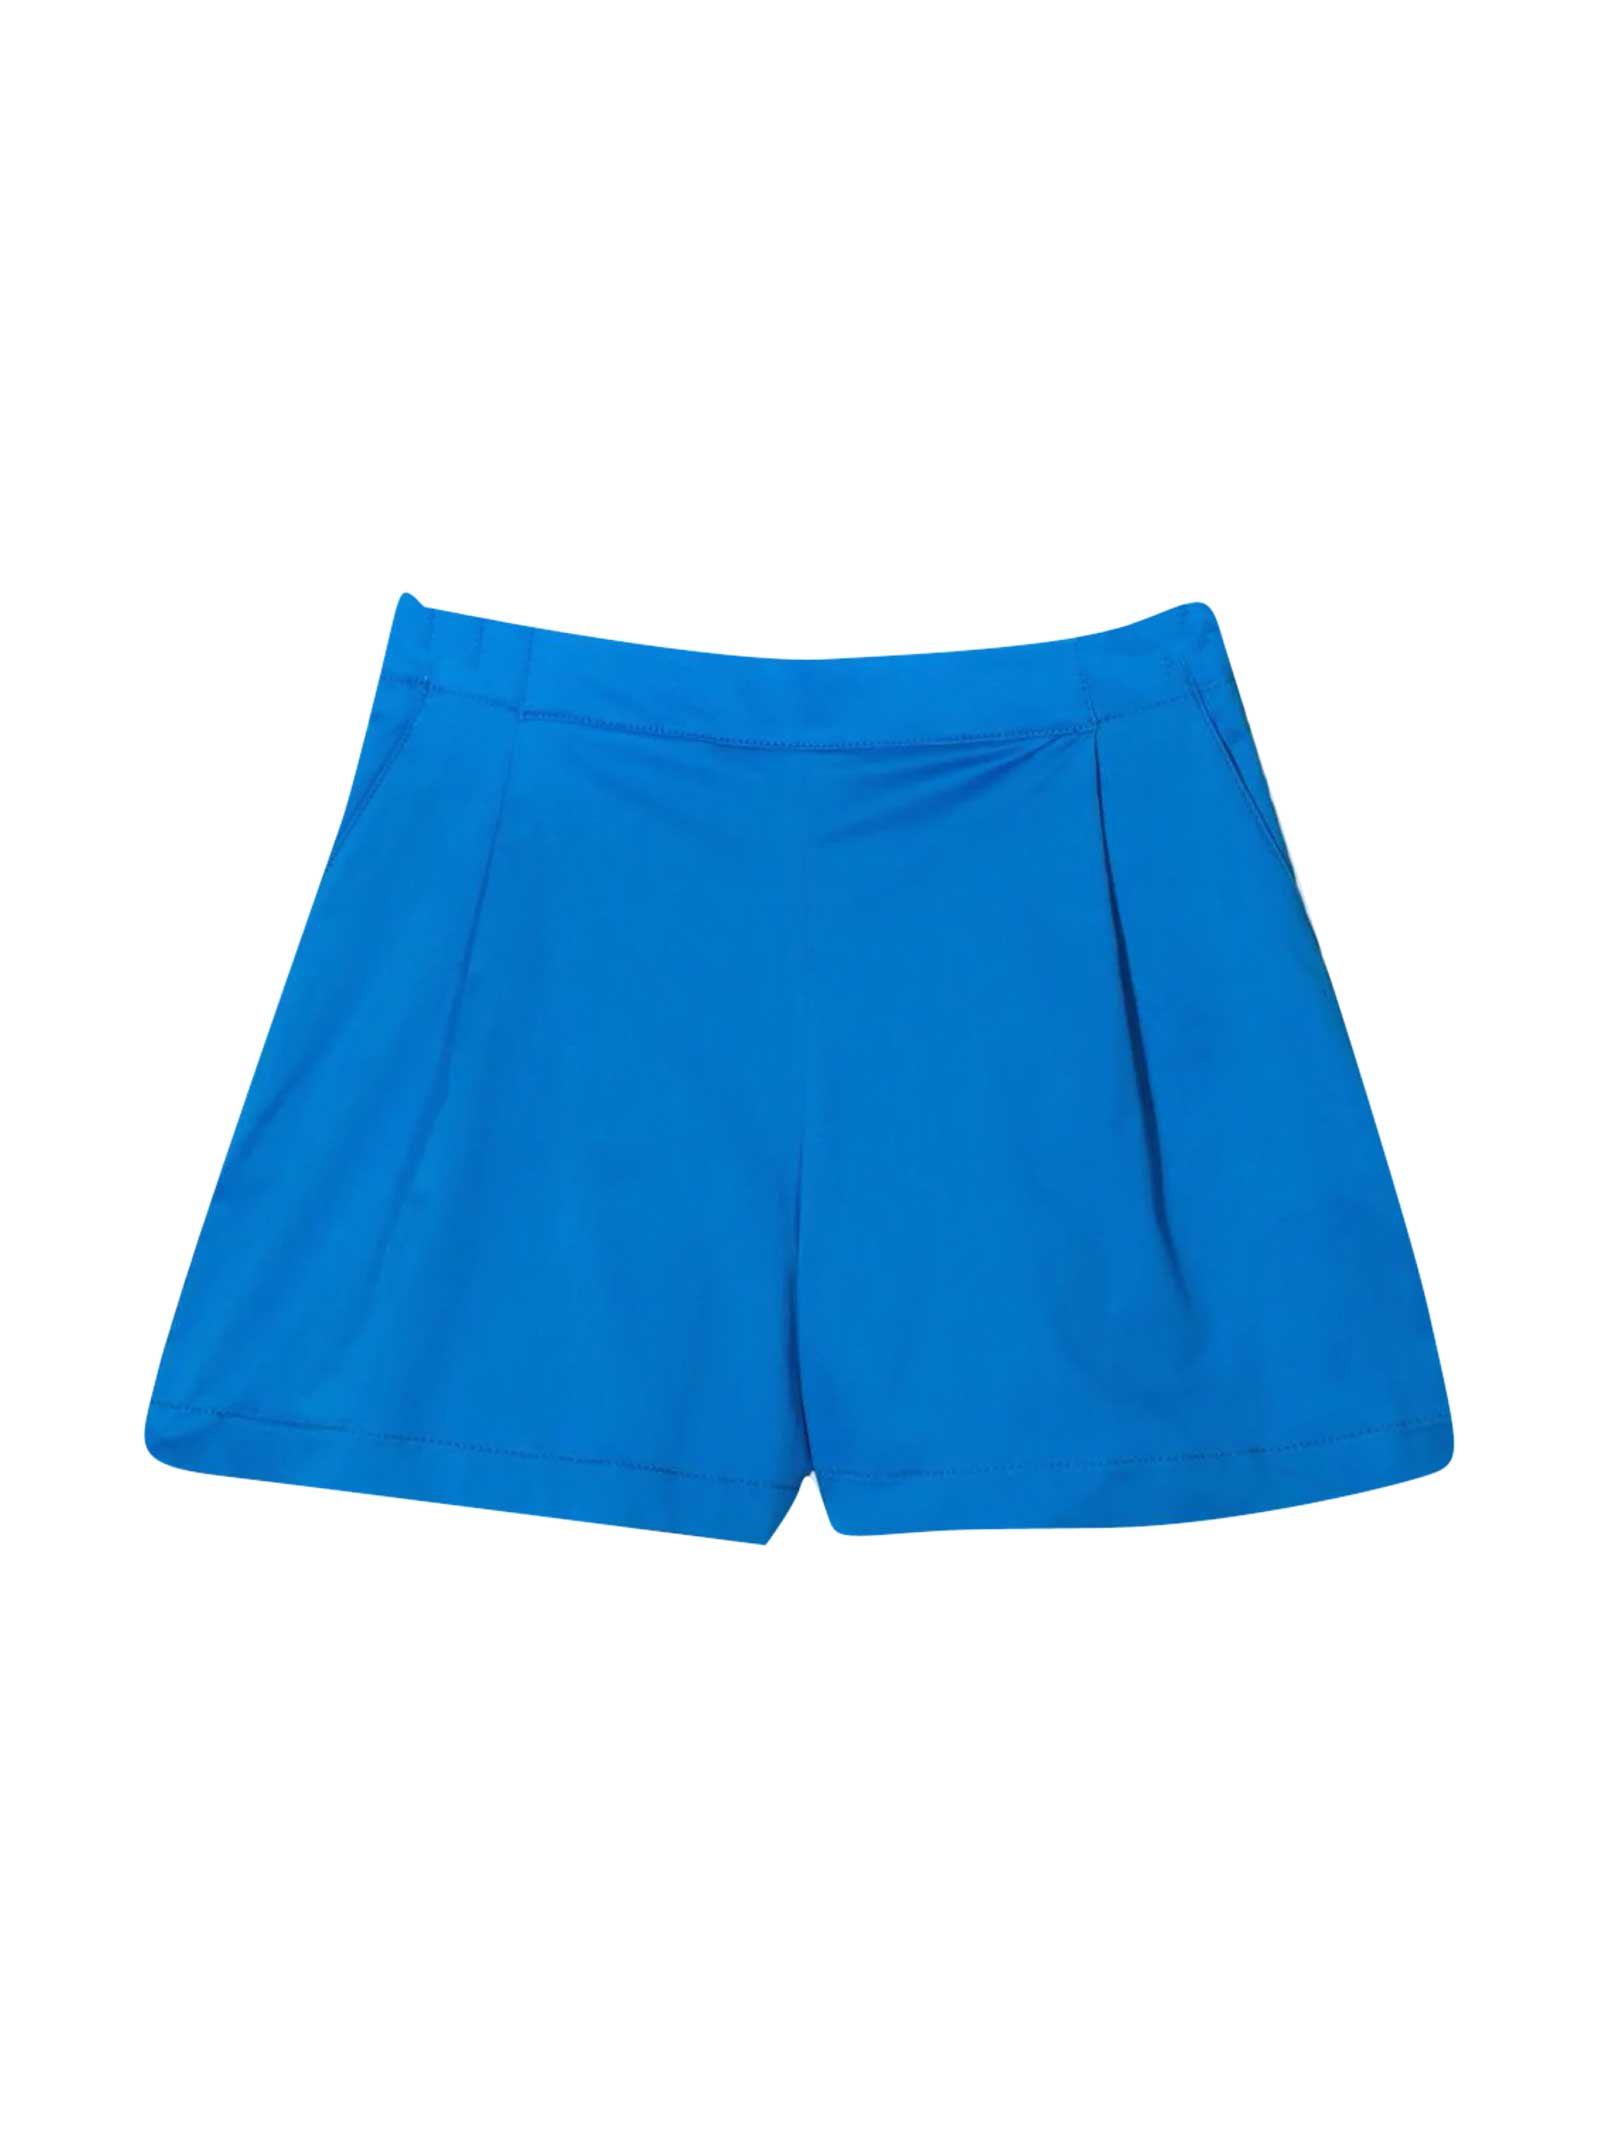 Emilio Pucci Light Blue Shorts